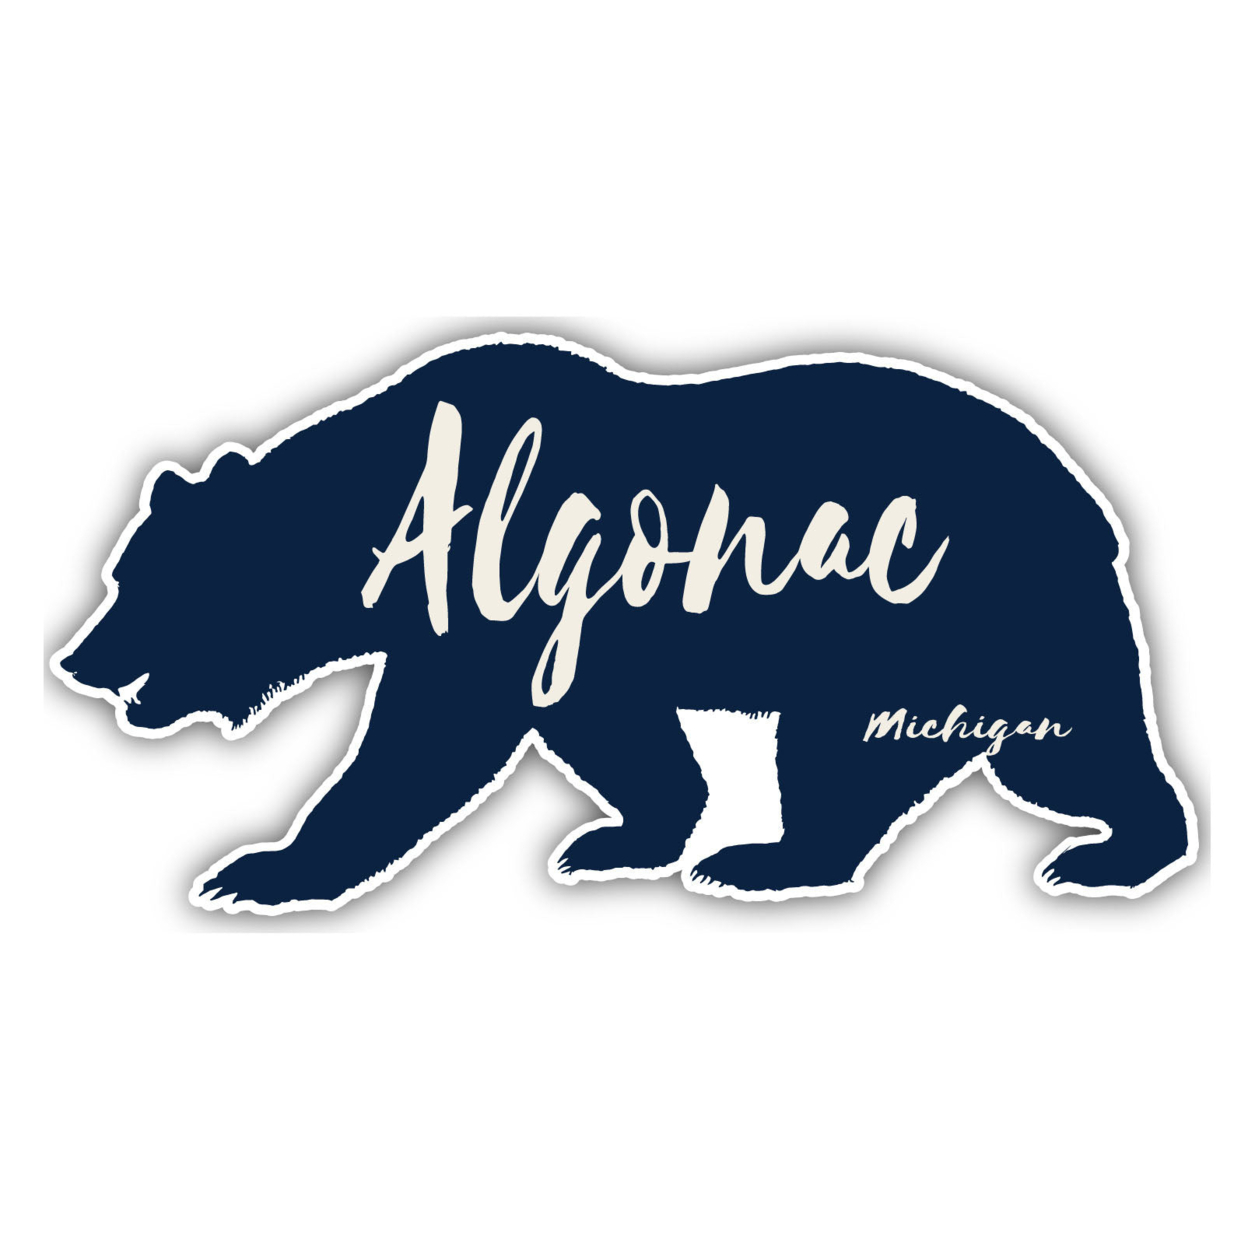 Algonac Michigan Souvenir Decorative Stickers (Choose Theme And Size) - 4-Pack, 4-Inch, Bear